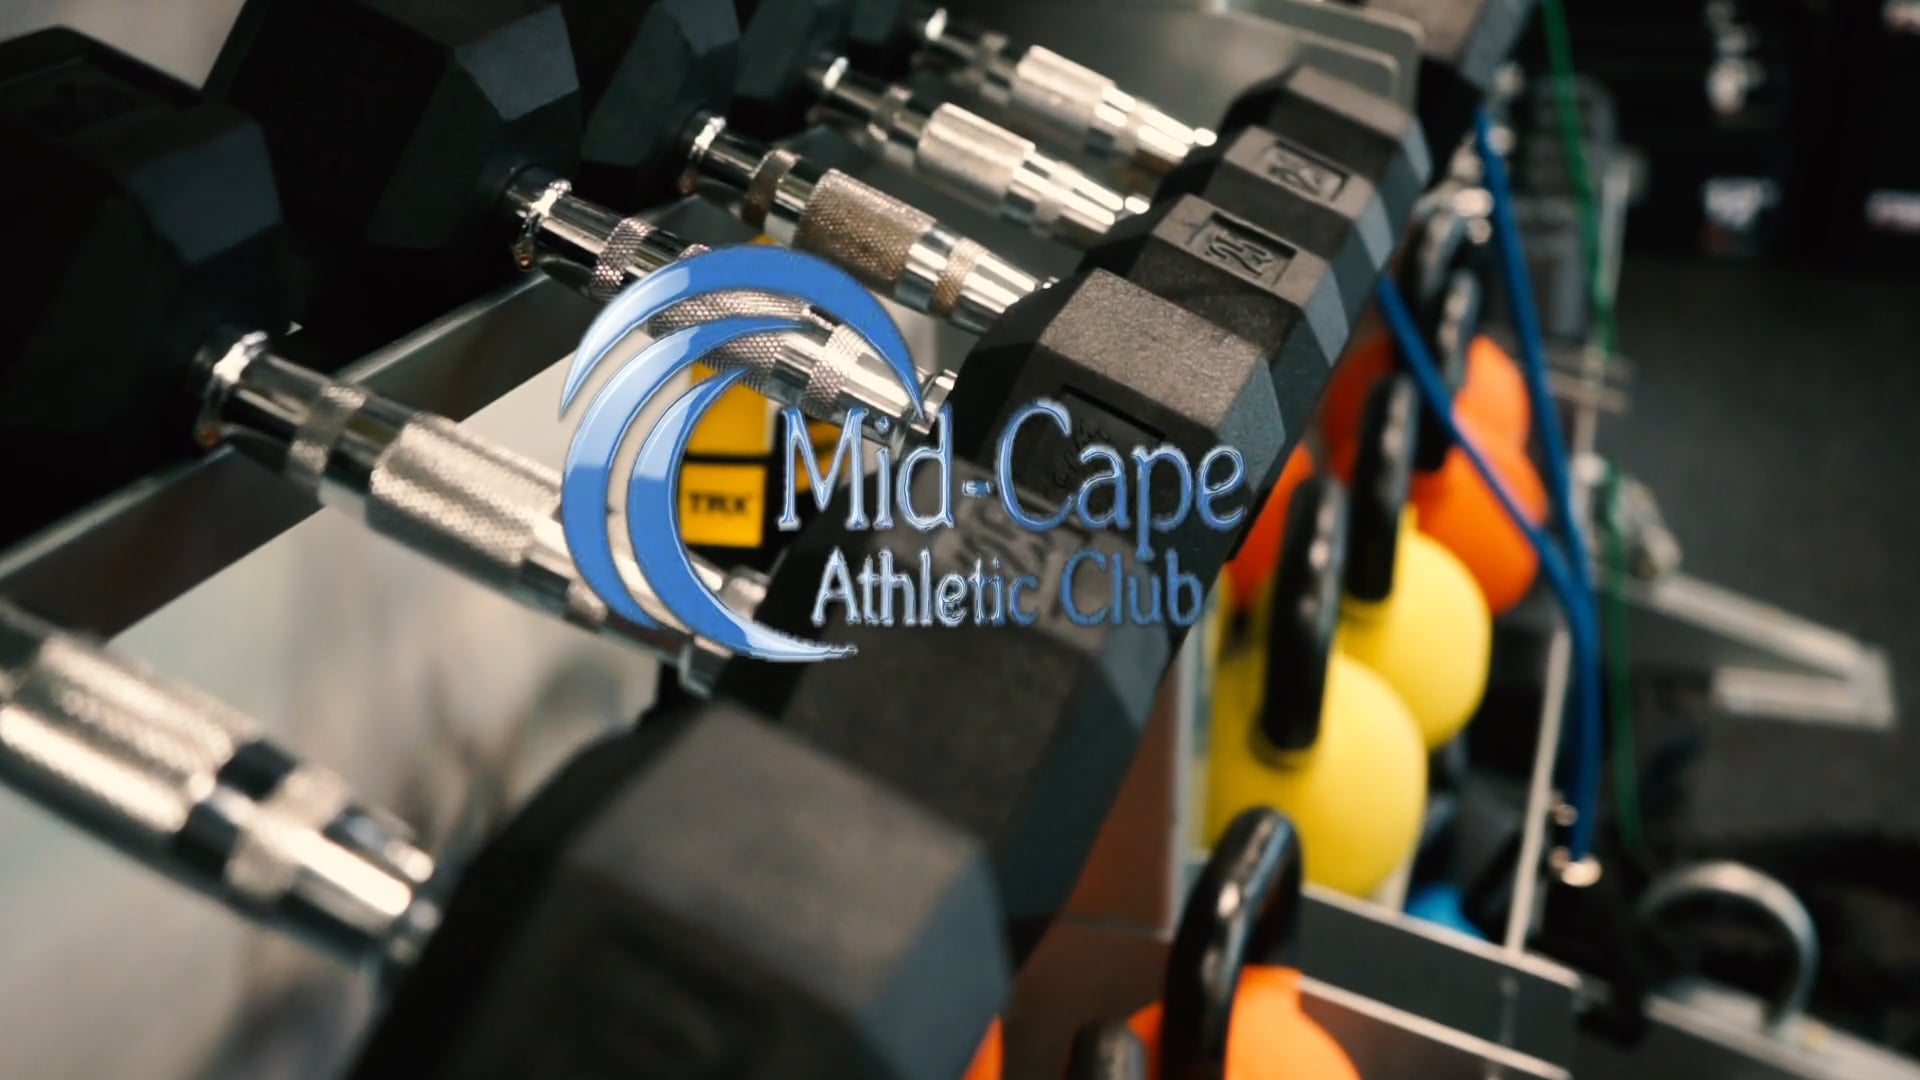 Mid Cape Athletic Club